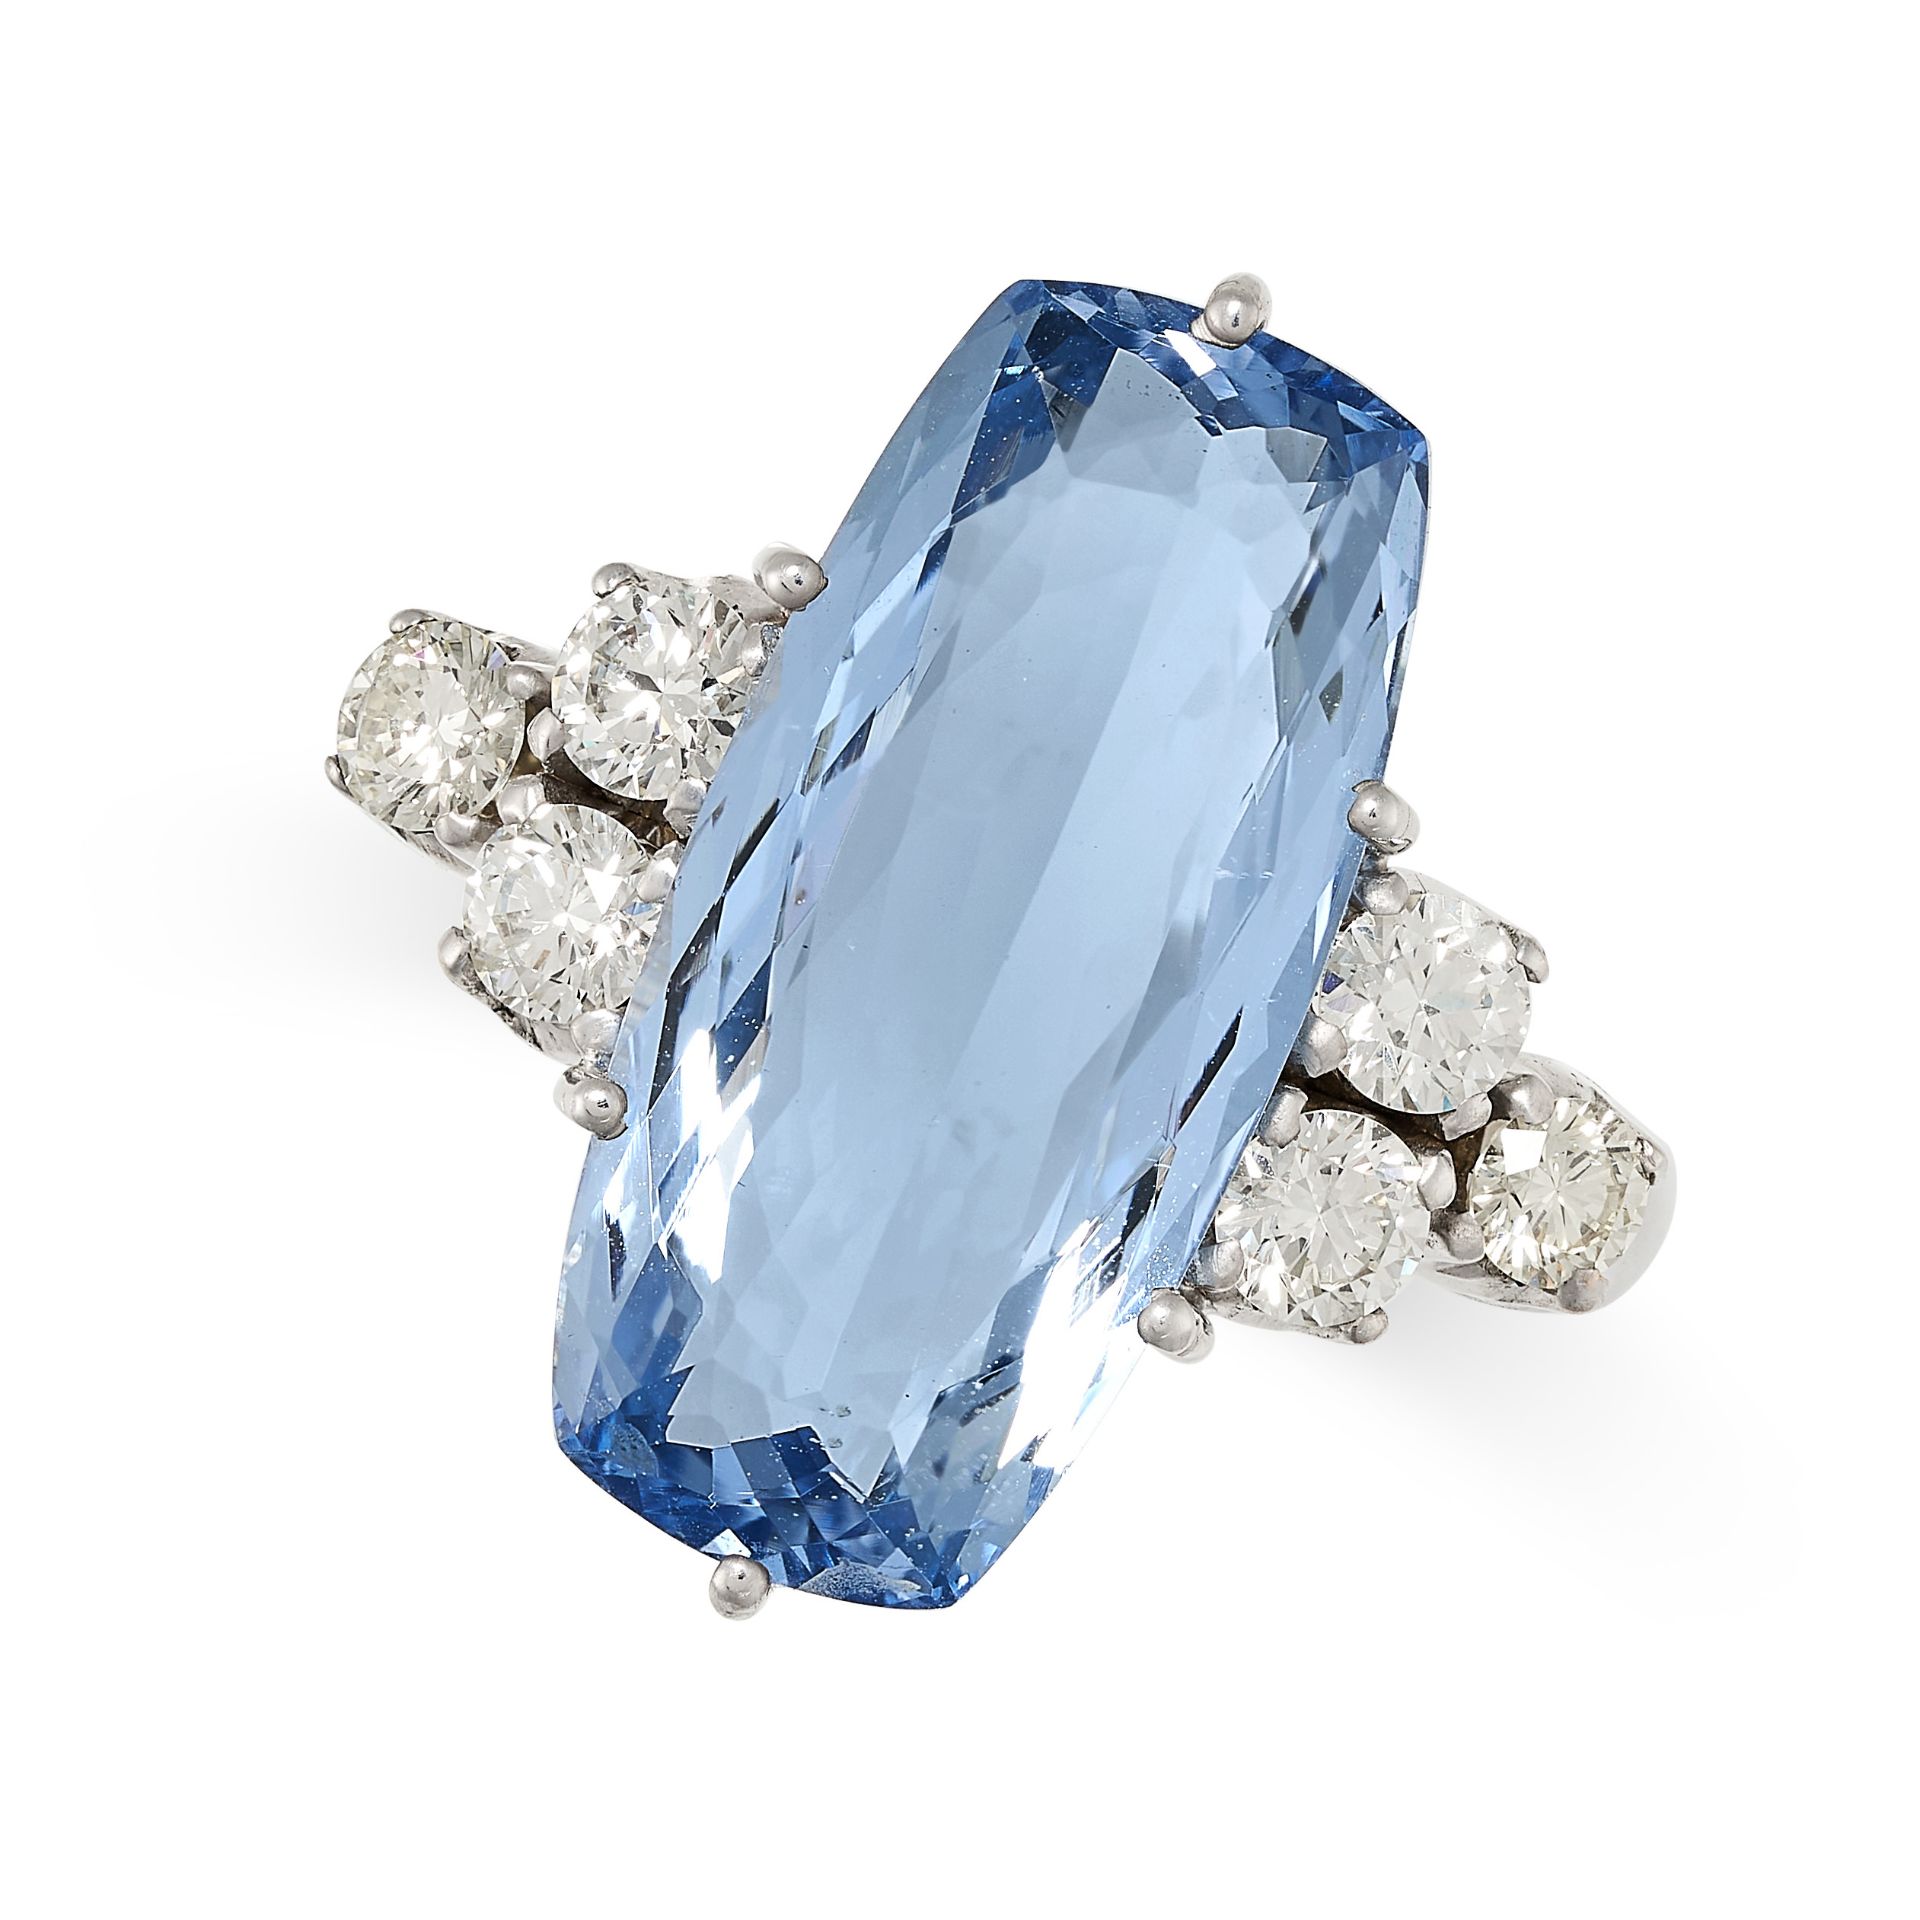 AN AQUAMARINE AND DIAMOND RING set with an elongated cushion cut aquamarine of 15.70 carats, the